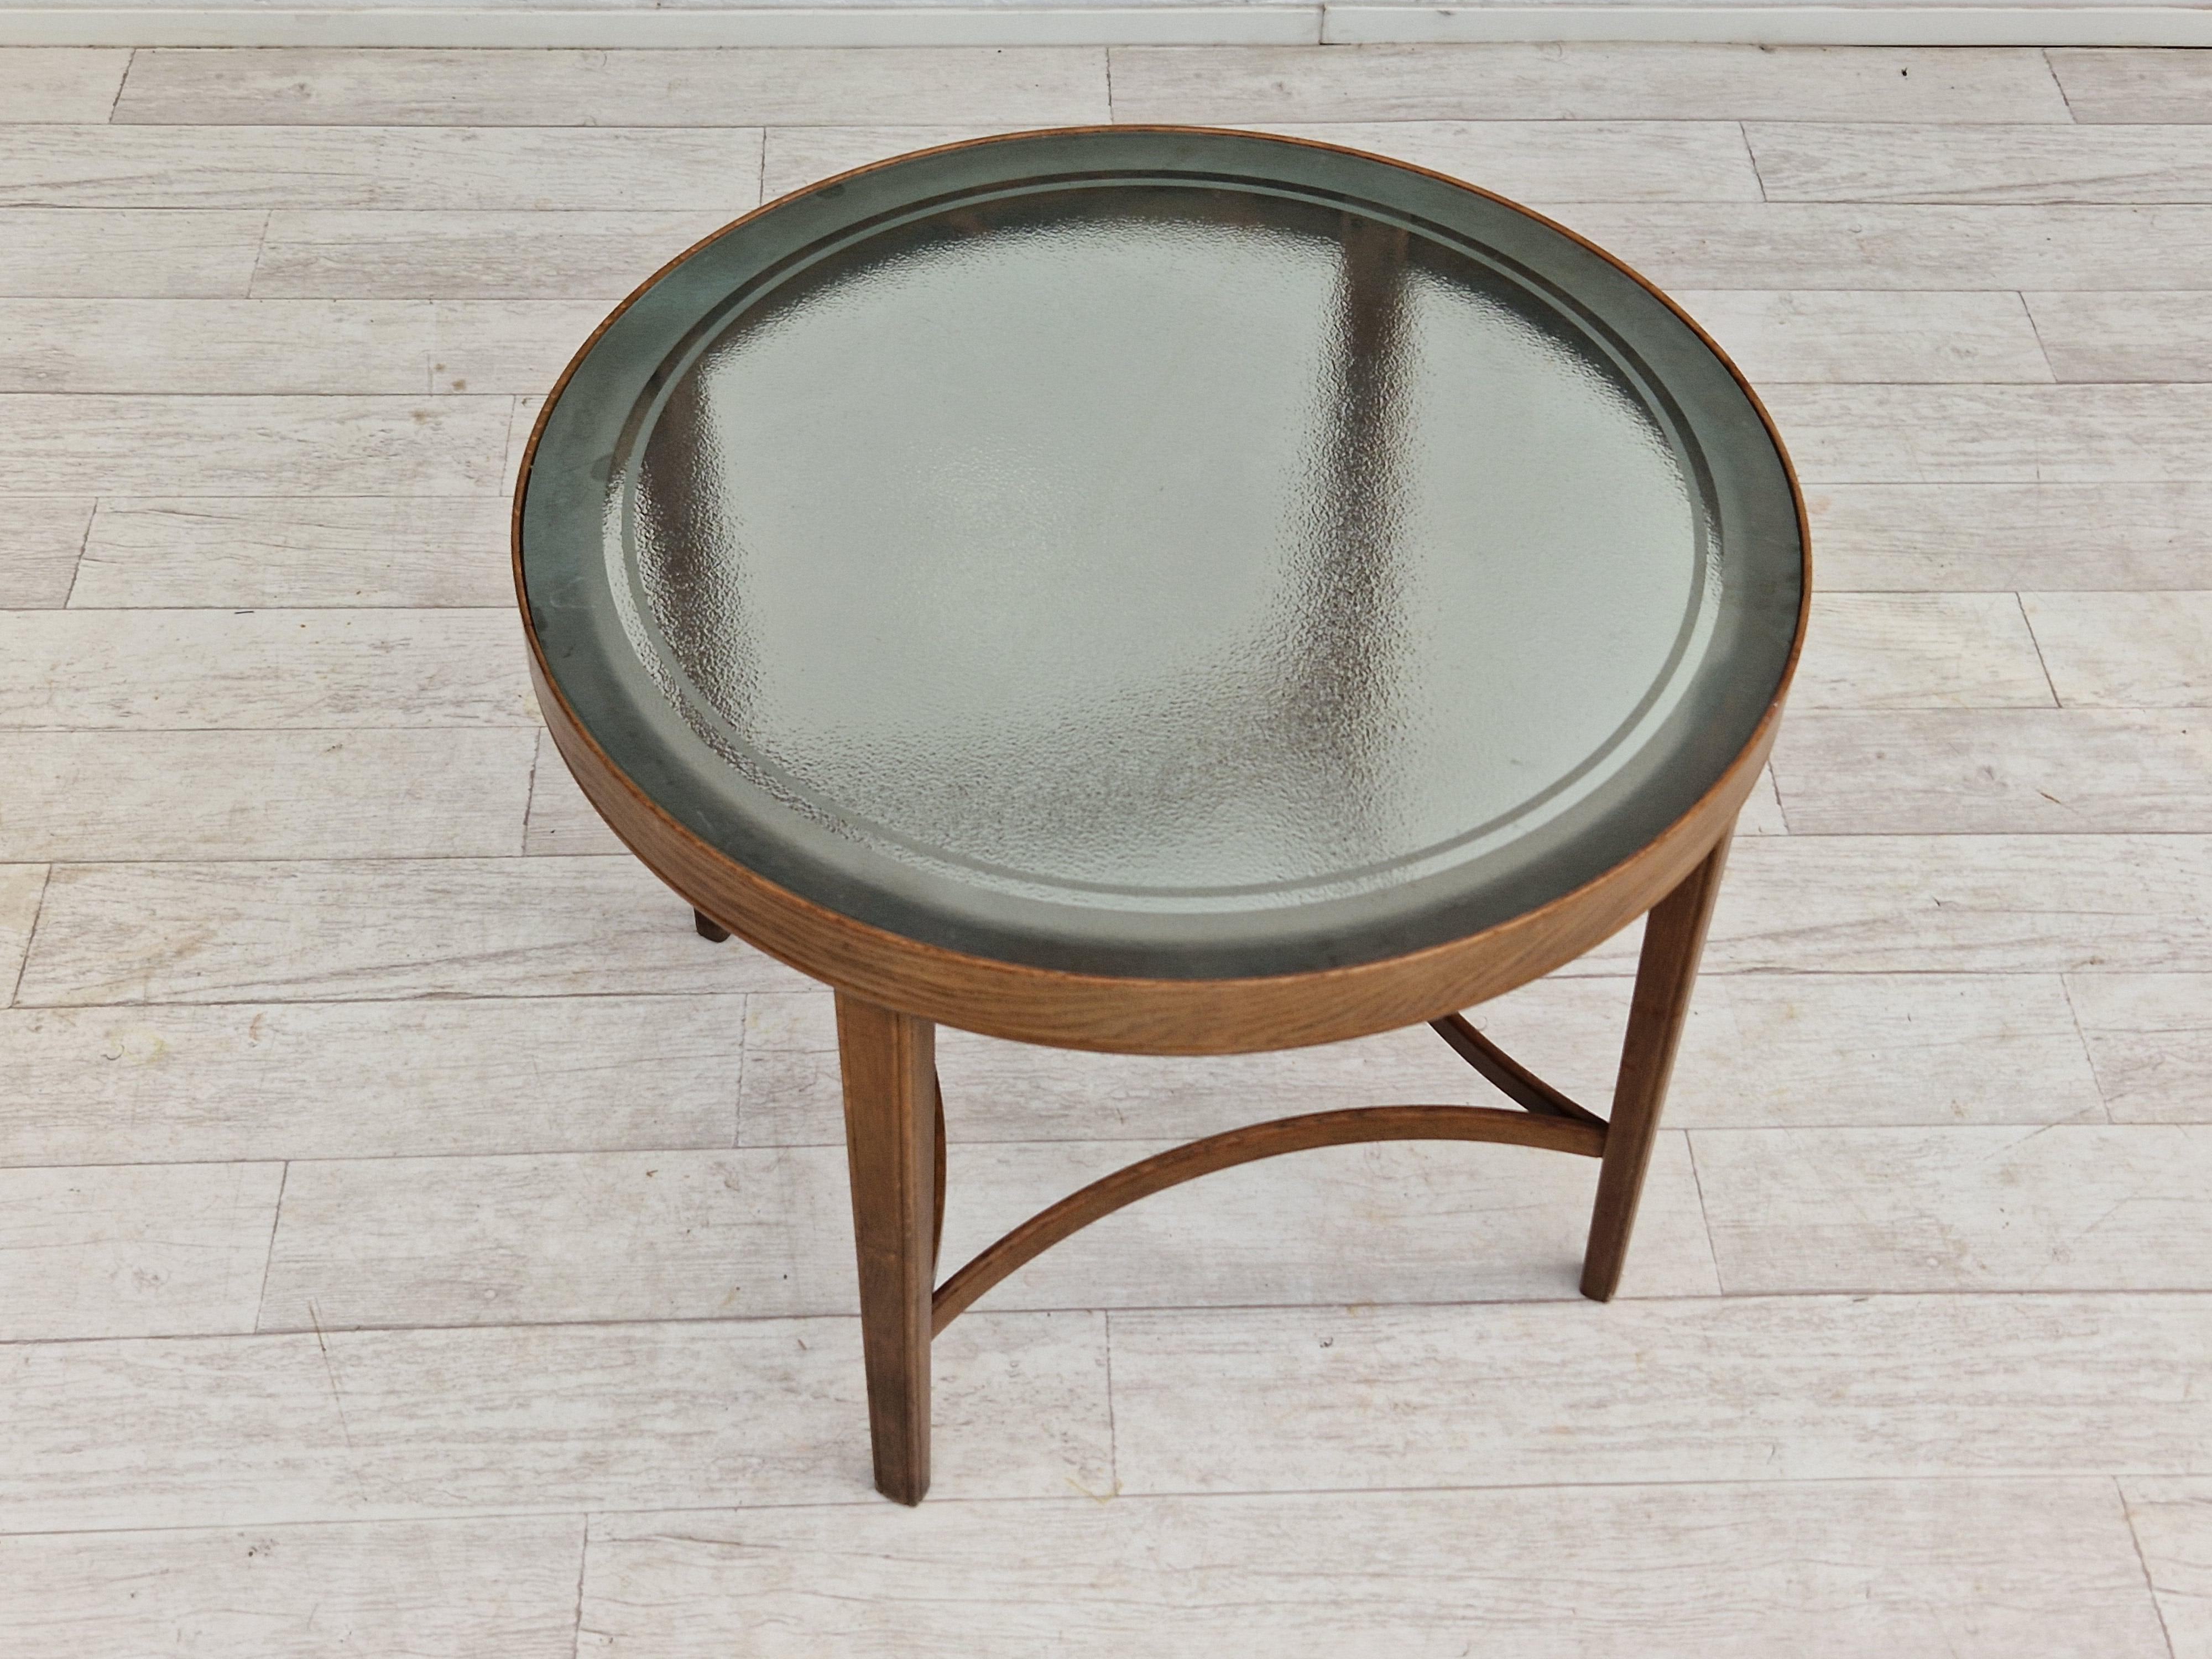 1950s, Danish design, coffee table, glass, oak wood, original condition. 6